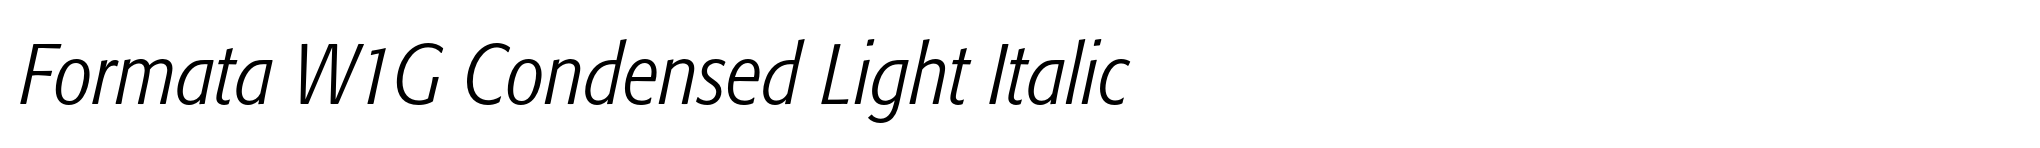 Formata W1G Condensed Light Italic image